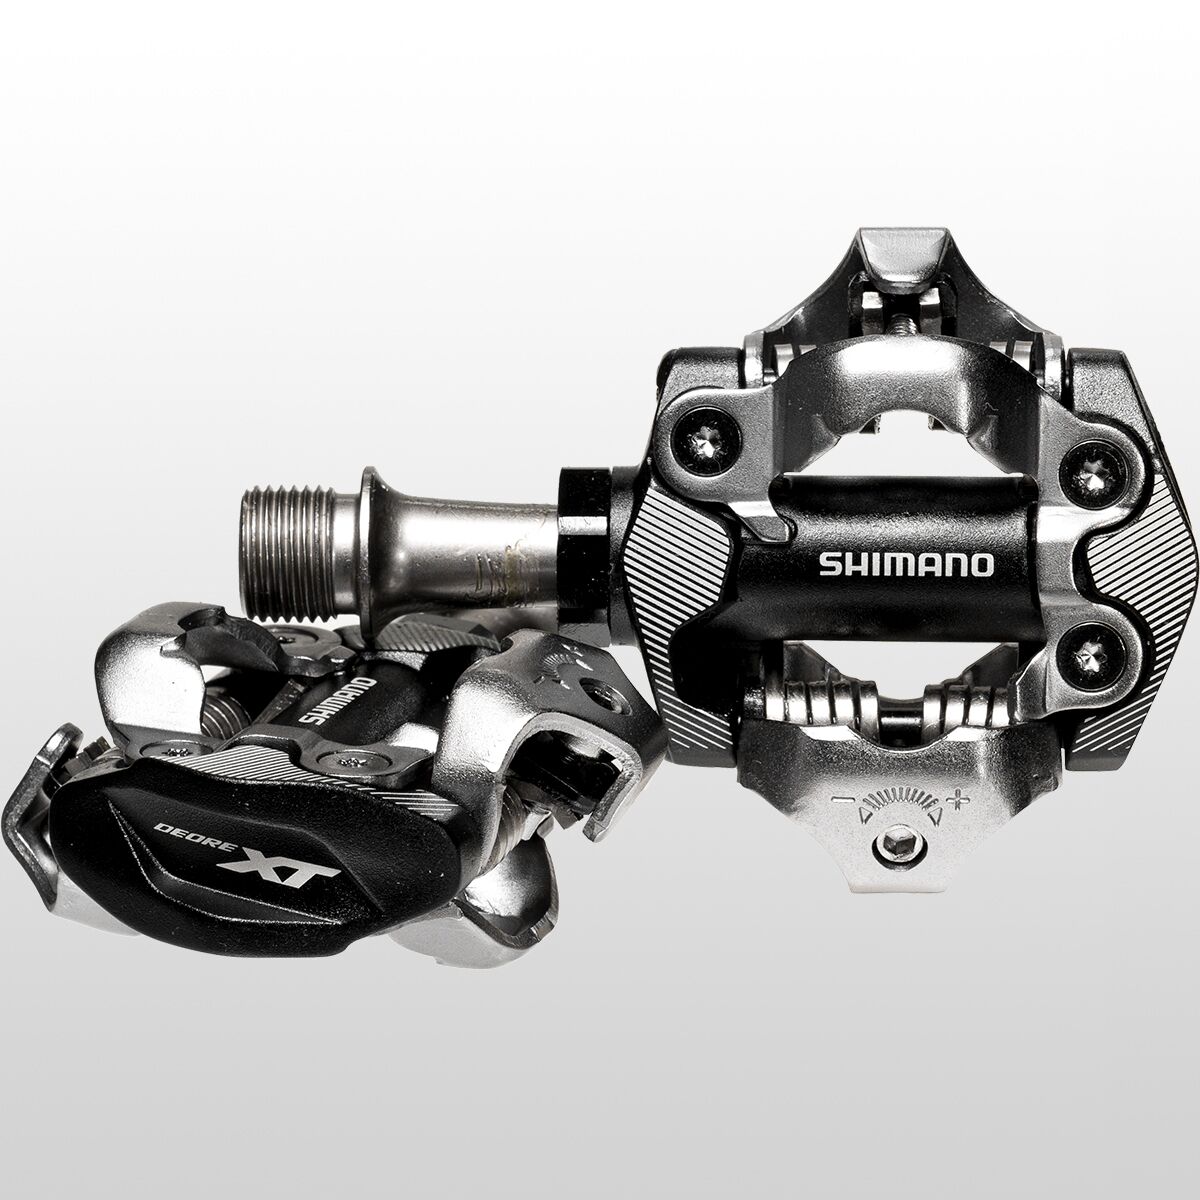 Shimano XT PD-M8100 SPD Pedals